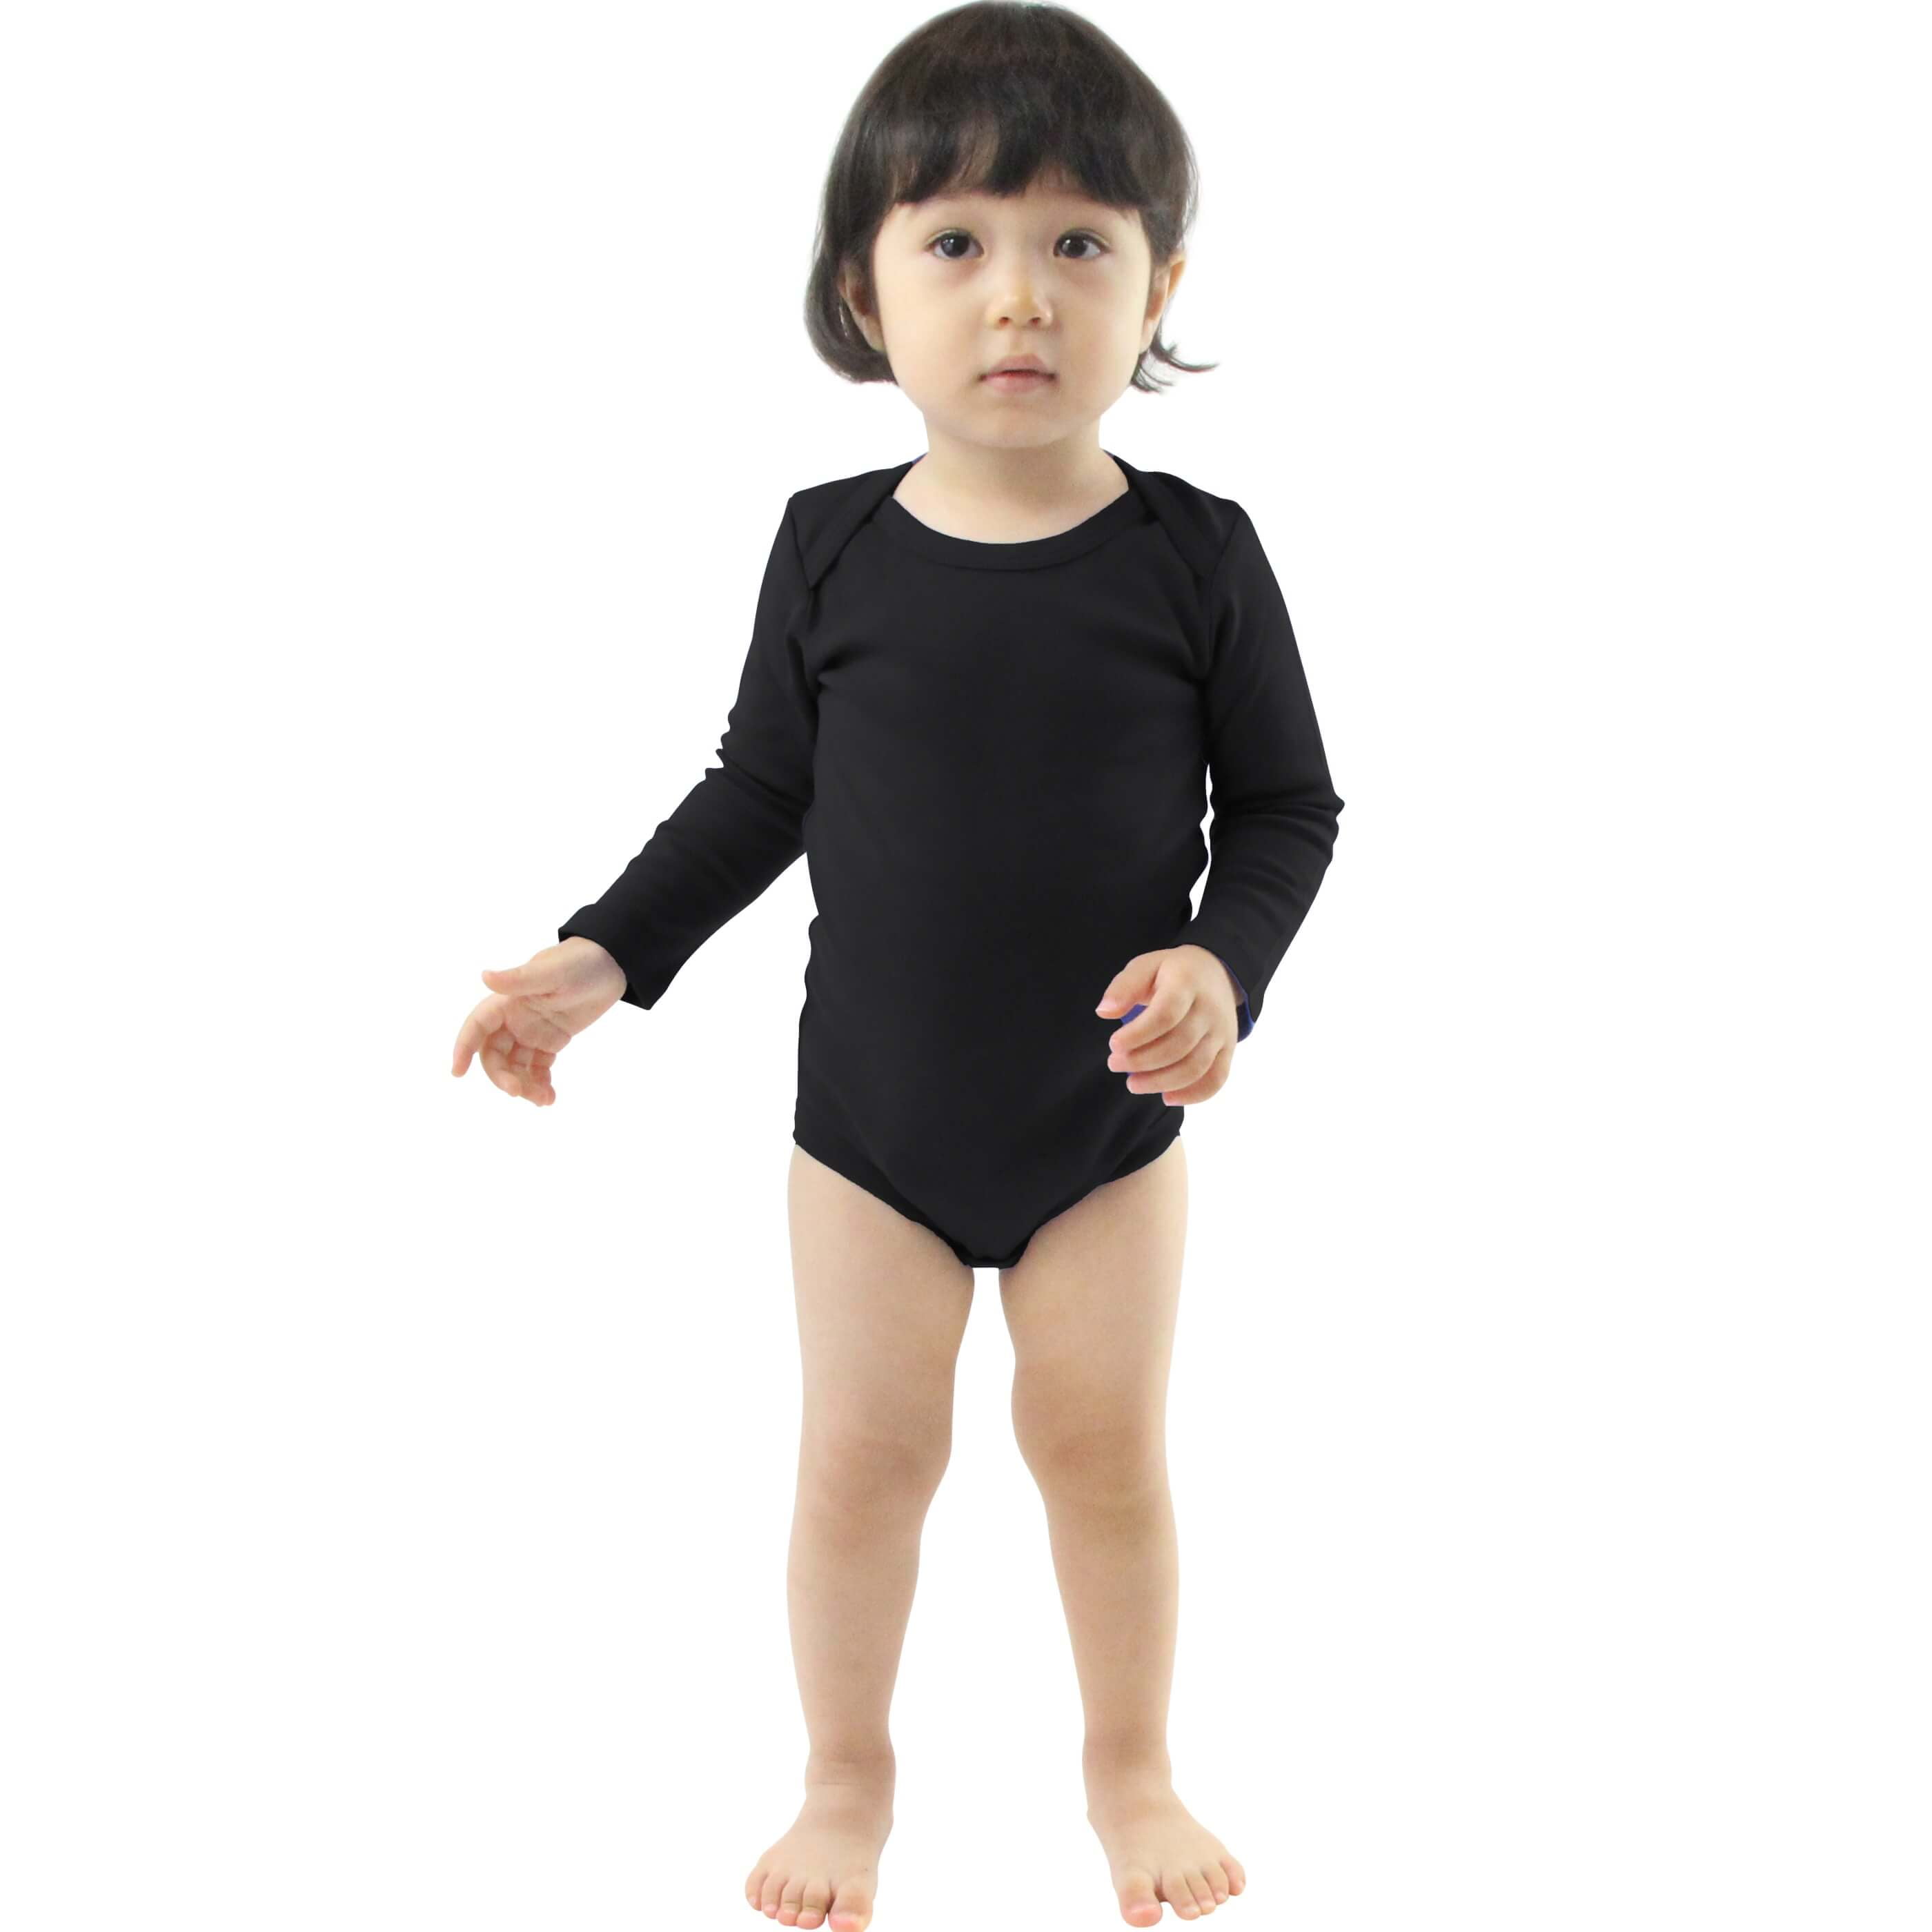 Couver Baby Cotton Longsleeve Onesie Infant Toddler Lap Shoulder Solid Color Bodysuit, Black, 24M